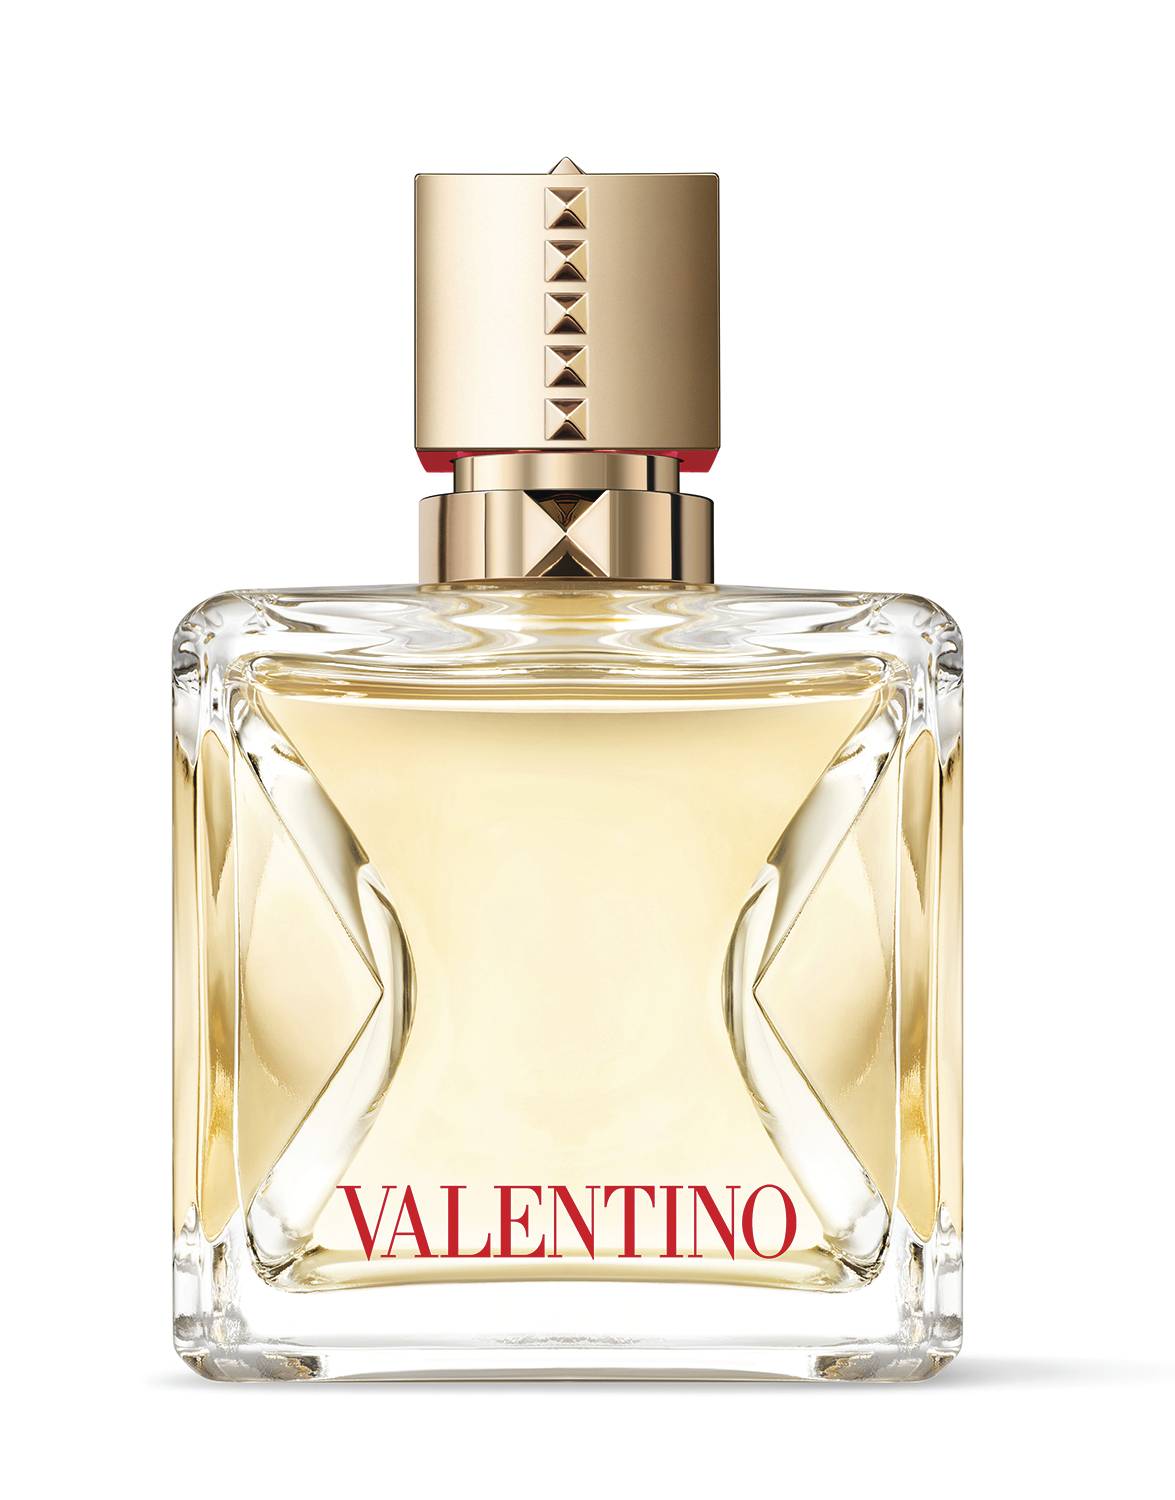 Valentino Voce Viva eau de parfum